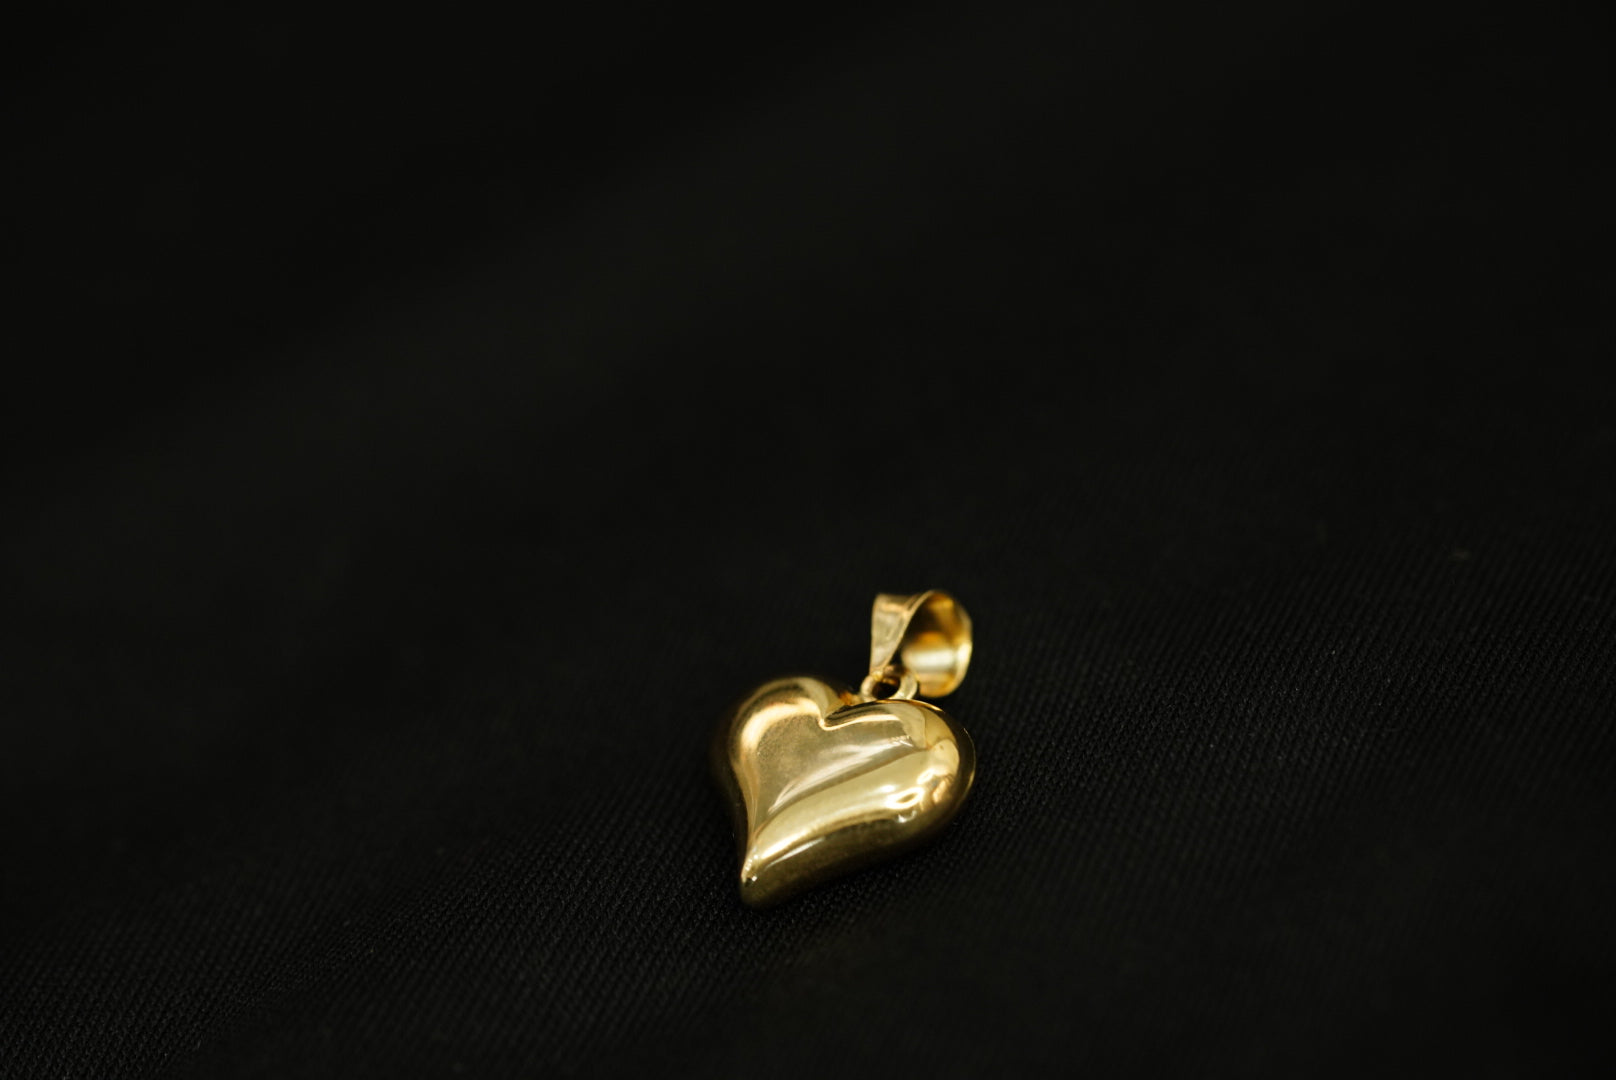 18k Diamond Cut Chain with Heart Pendant